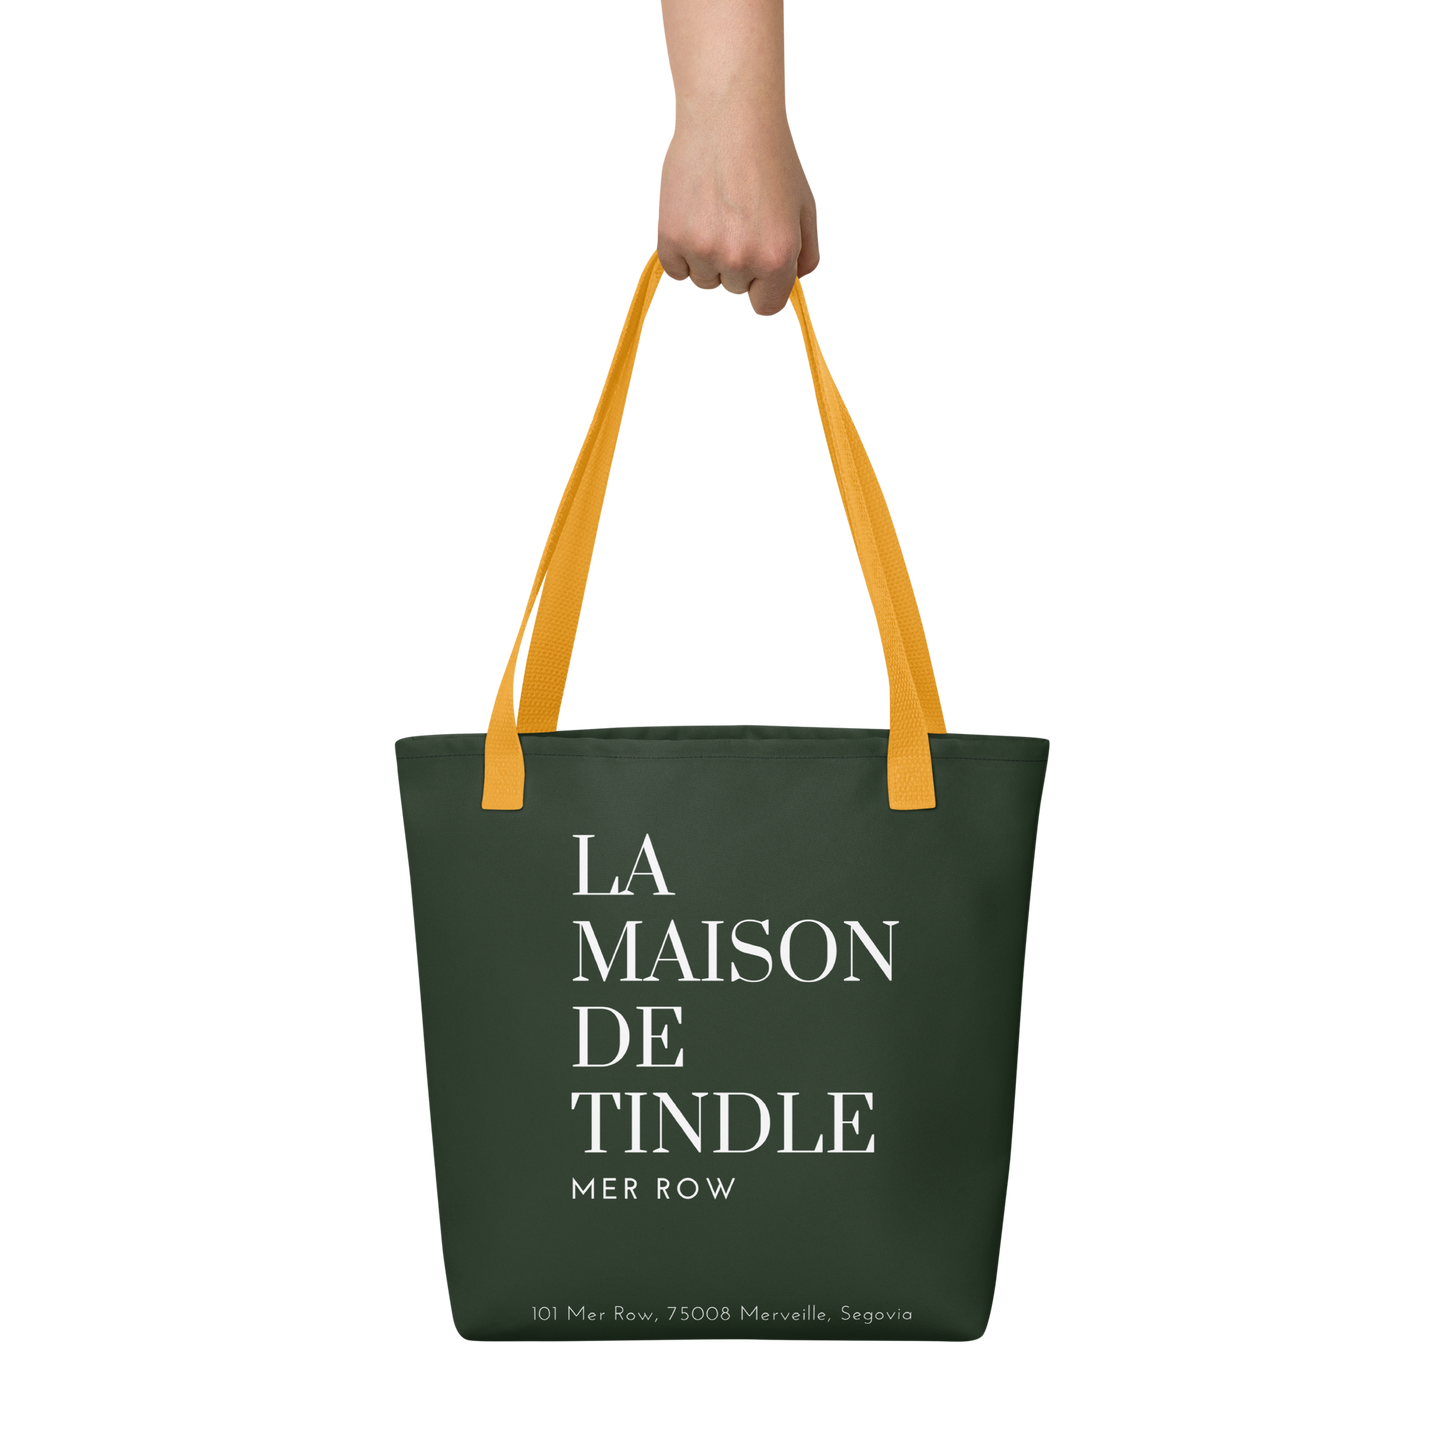 Tindle's Dress Shop Bag